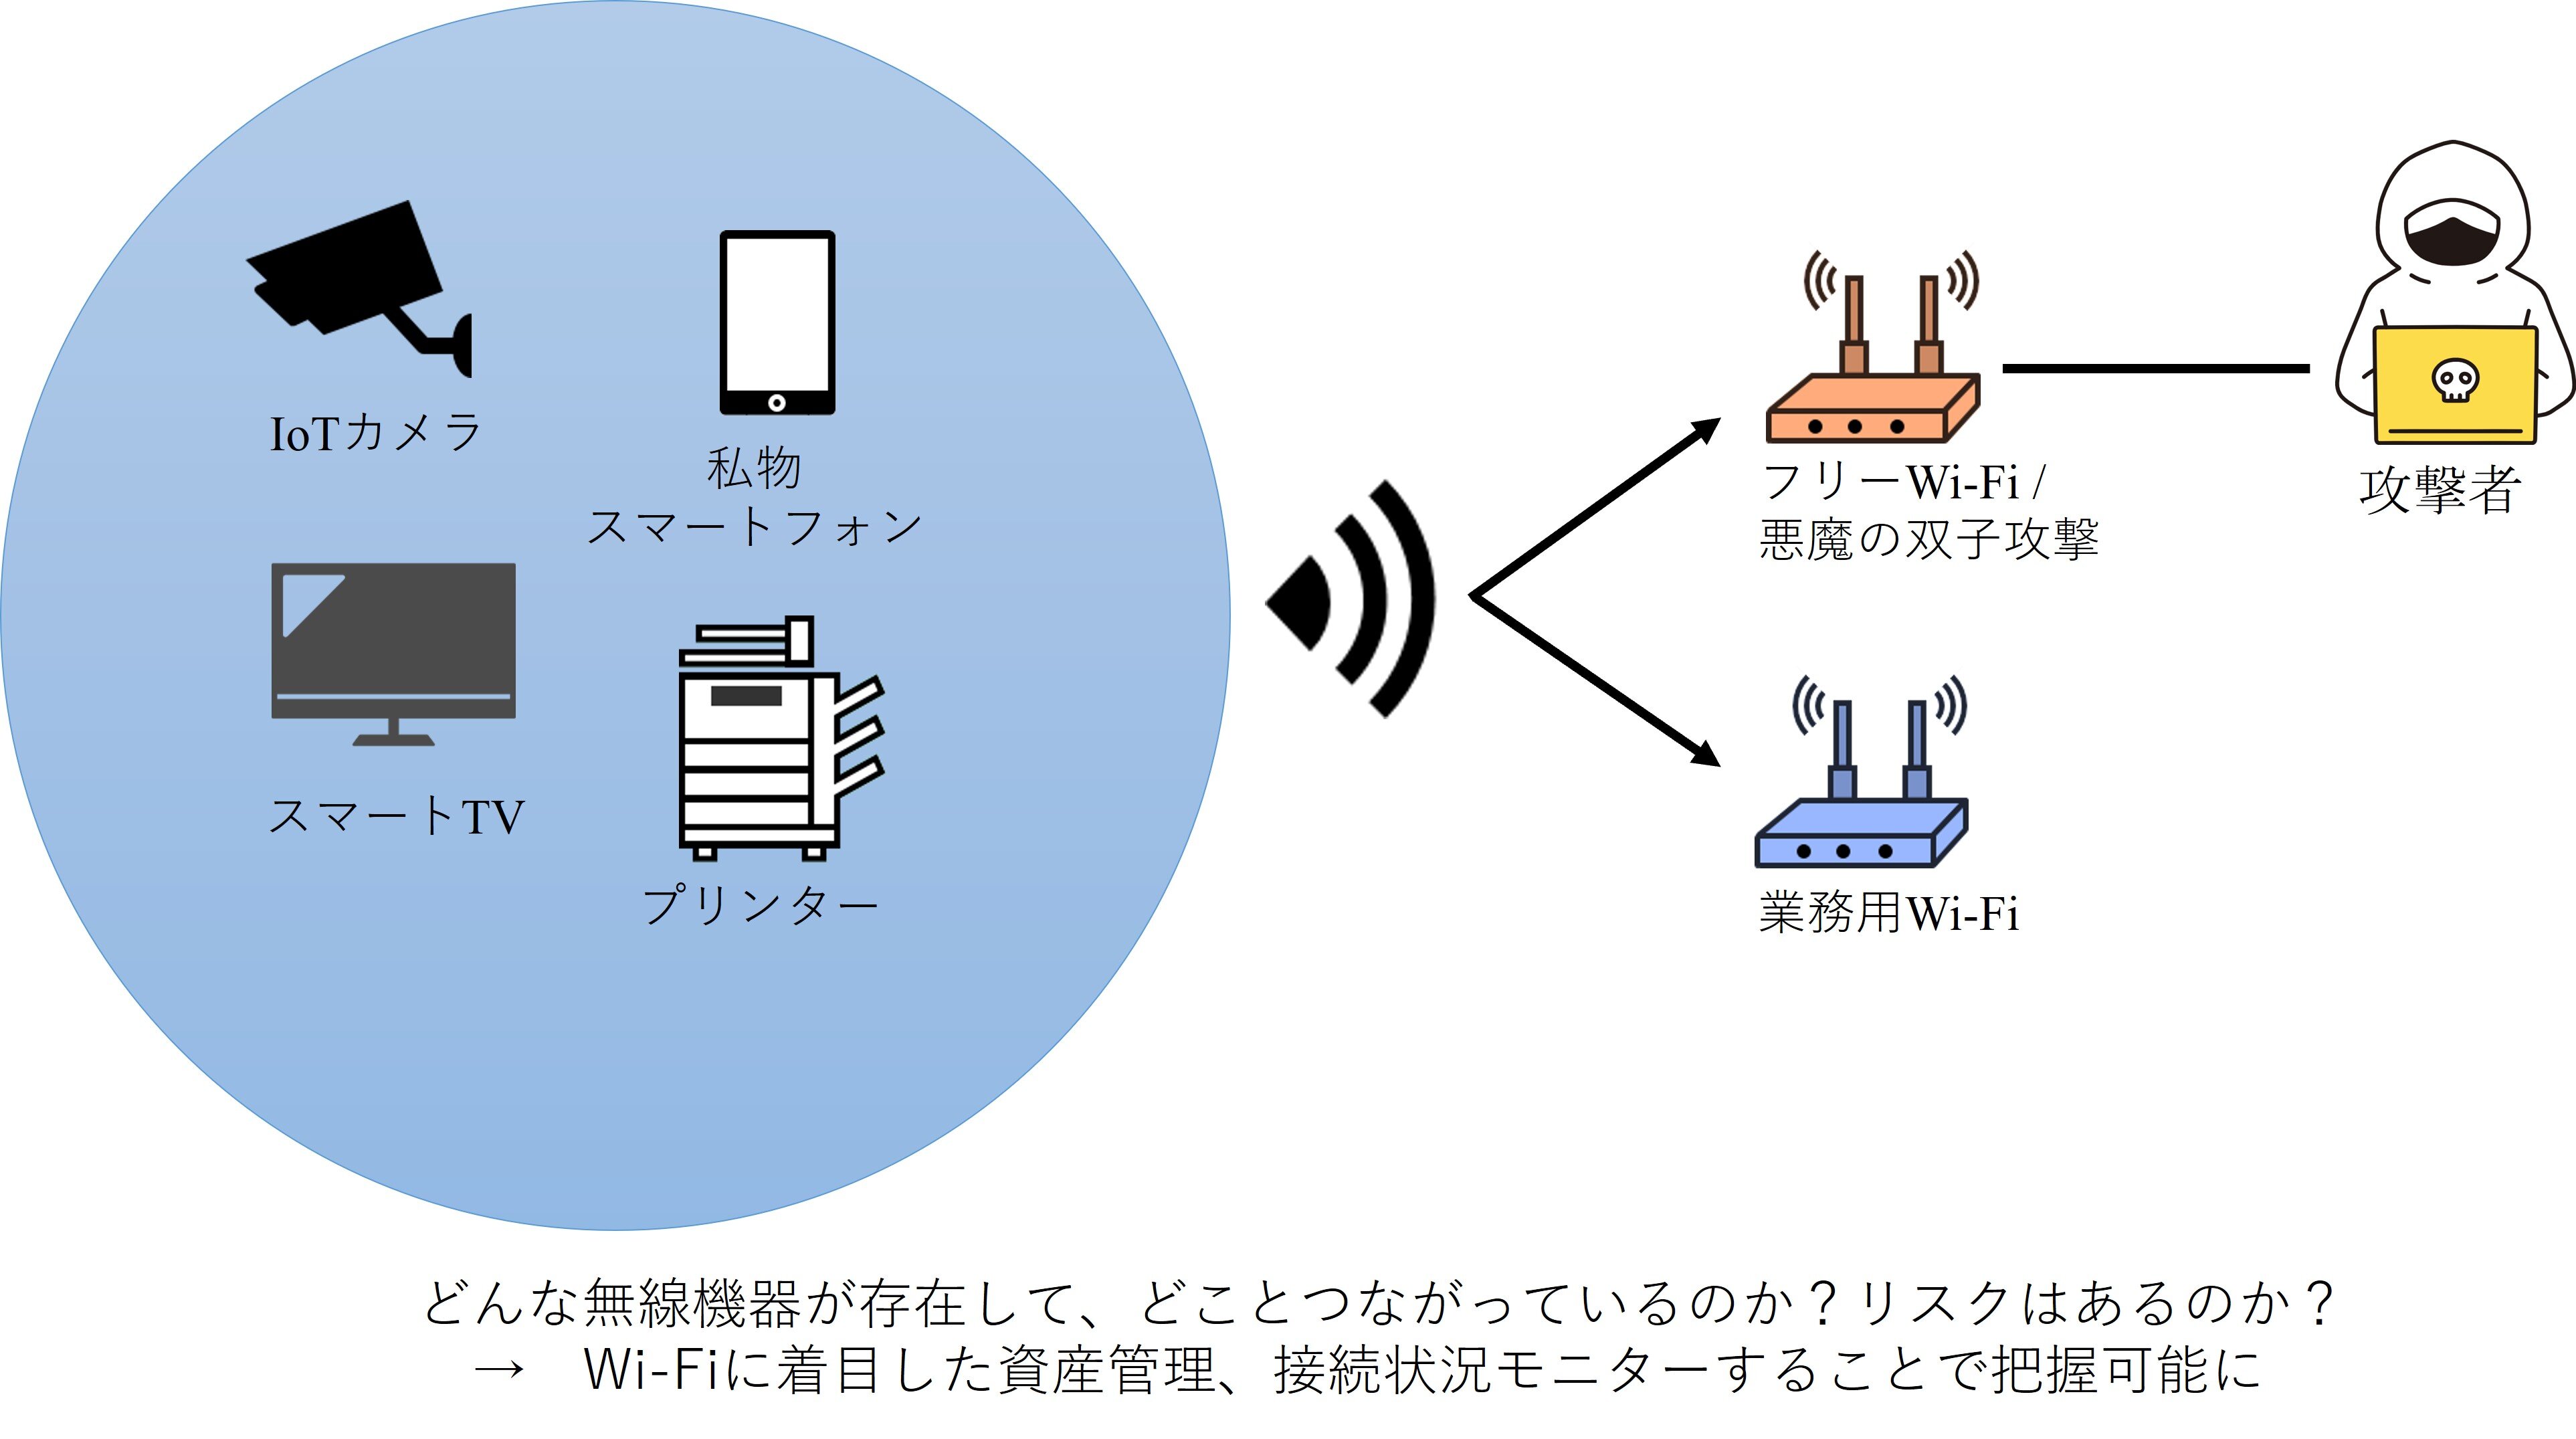 Wi-Fi通信機器の洗い出しから接続監視を実施できるソリューション「AirEye Dome」